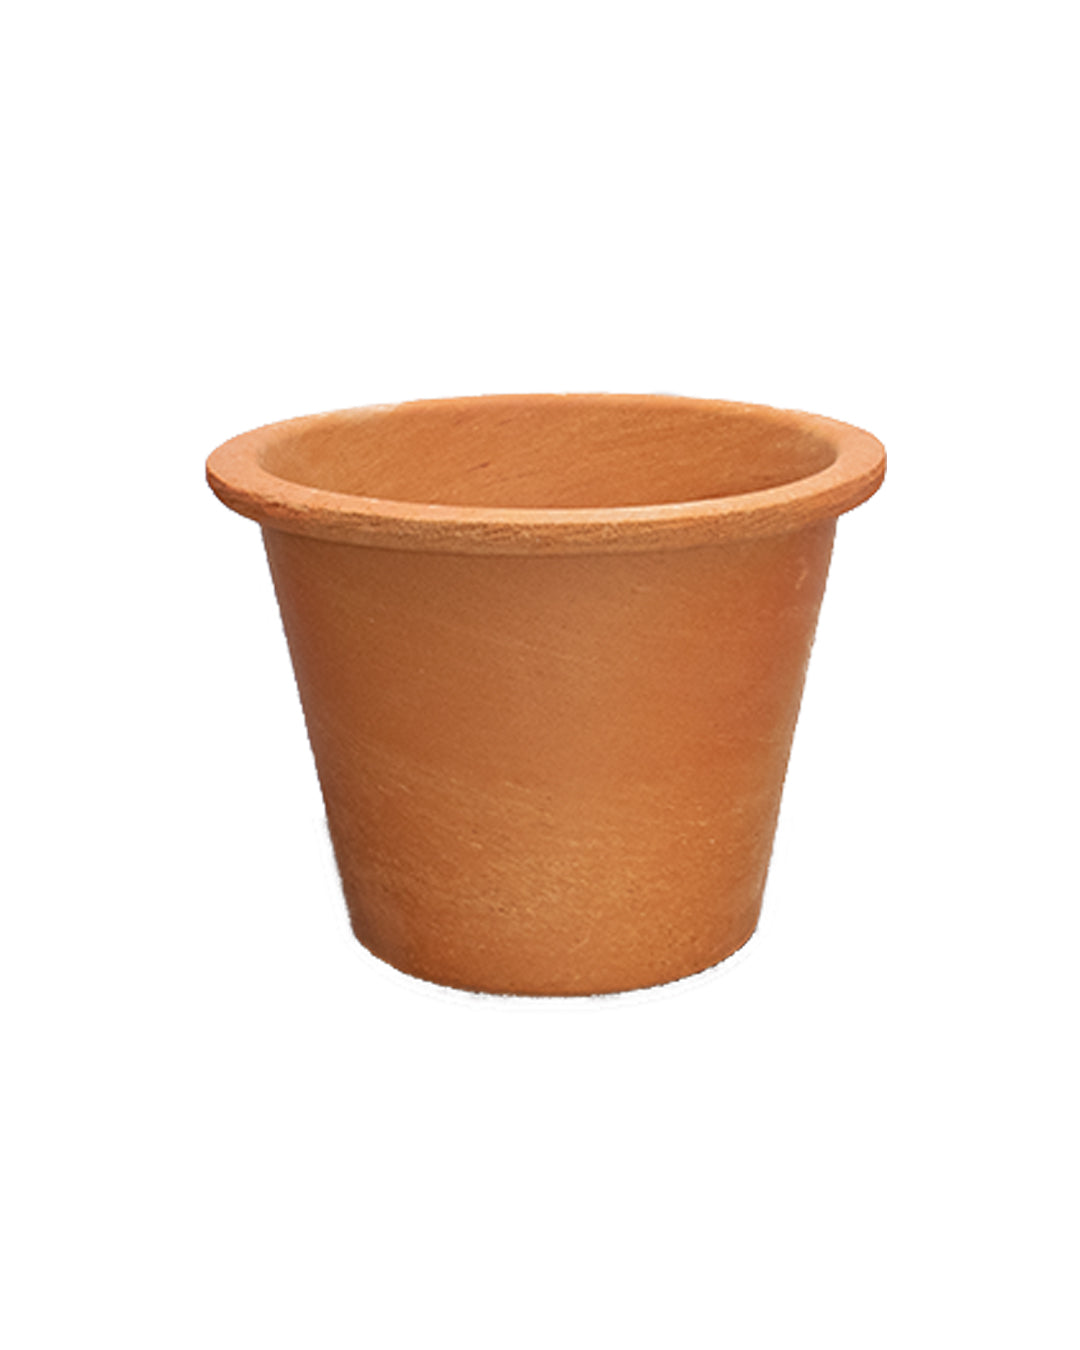 ceramic water filter pot